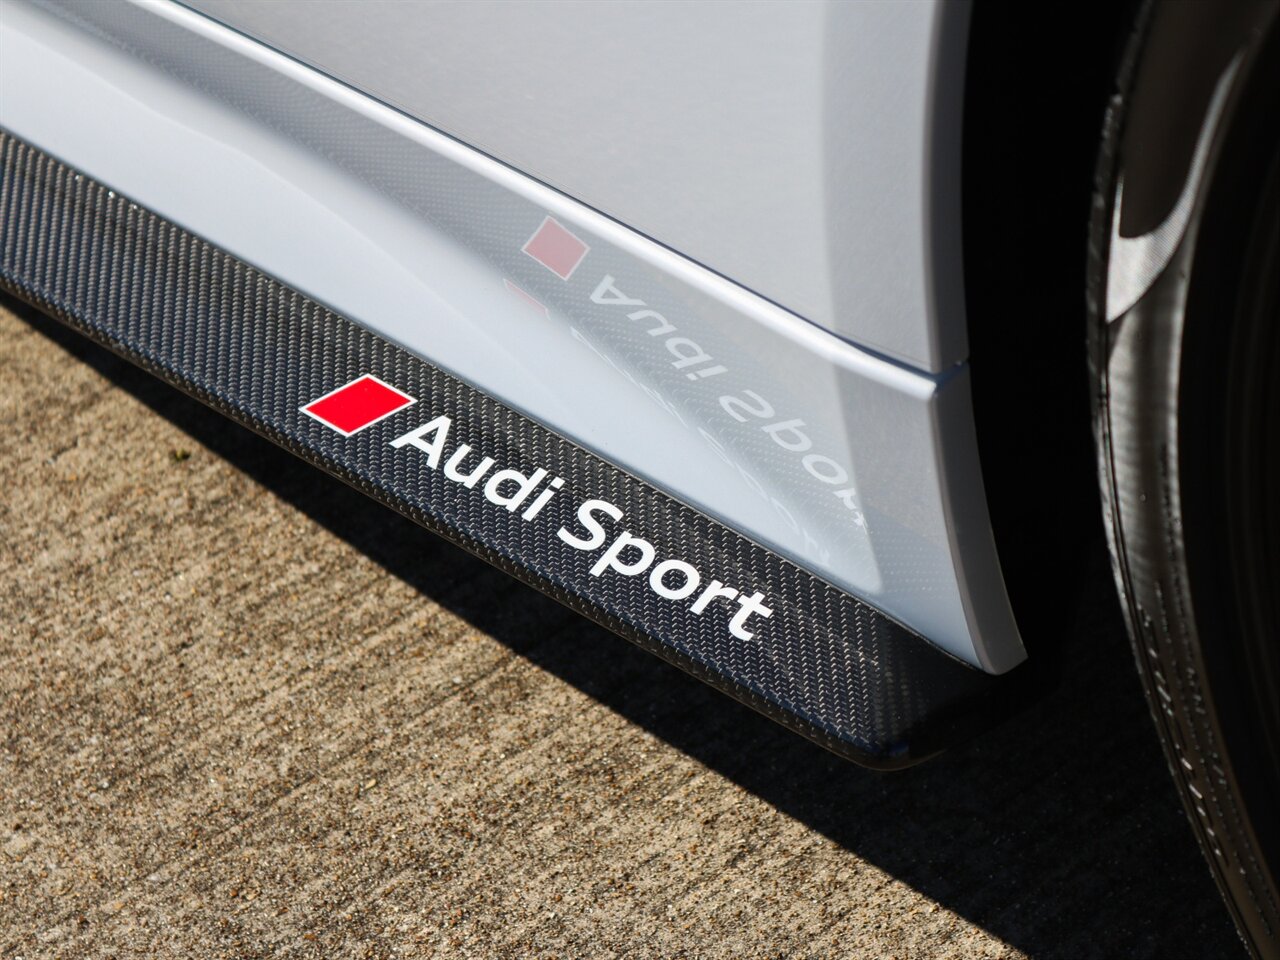 2018 Audi R8 5.2 quattro V10 Plus  Performance Edition, 1 of 10 for USA - Photo 81 - Springfield, MO 65802